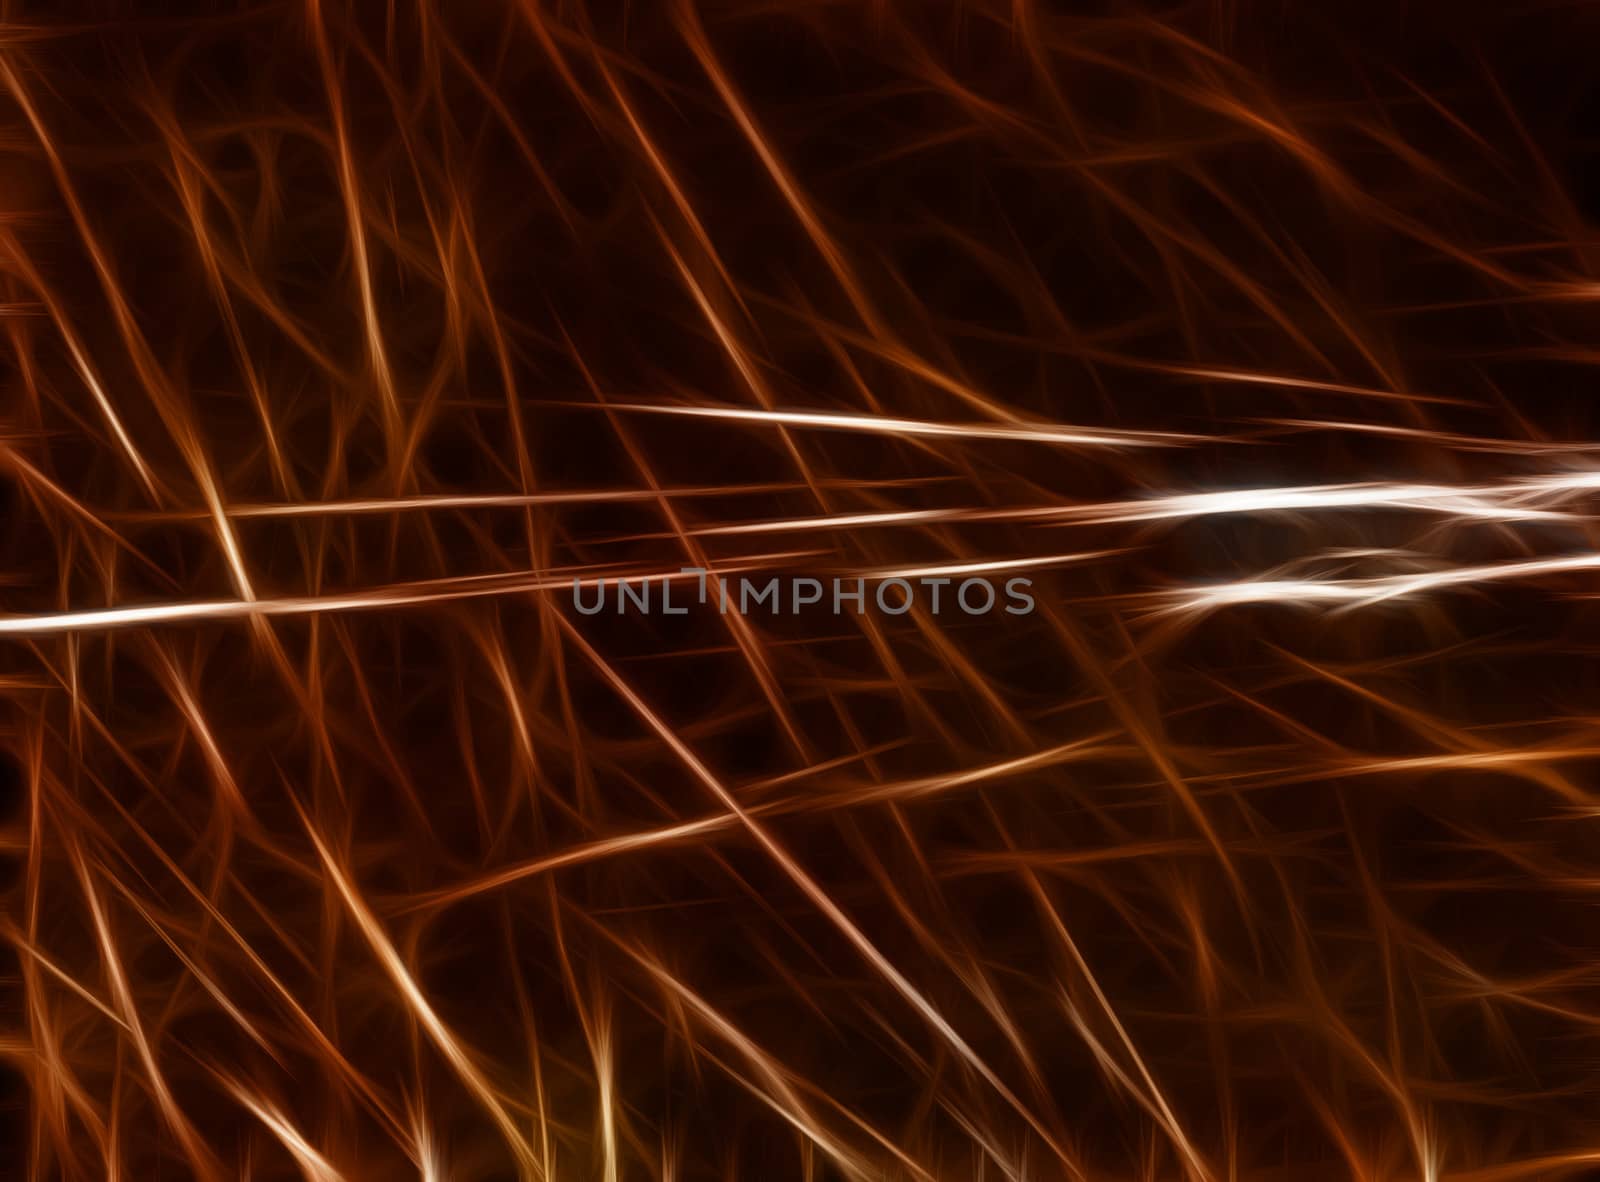 Fiery abstract by gandolfocannatella